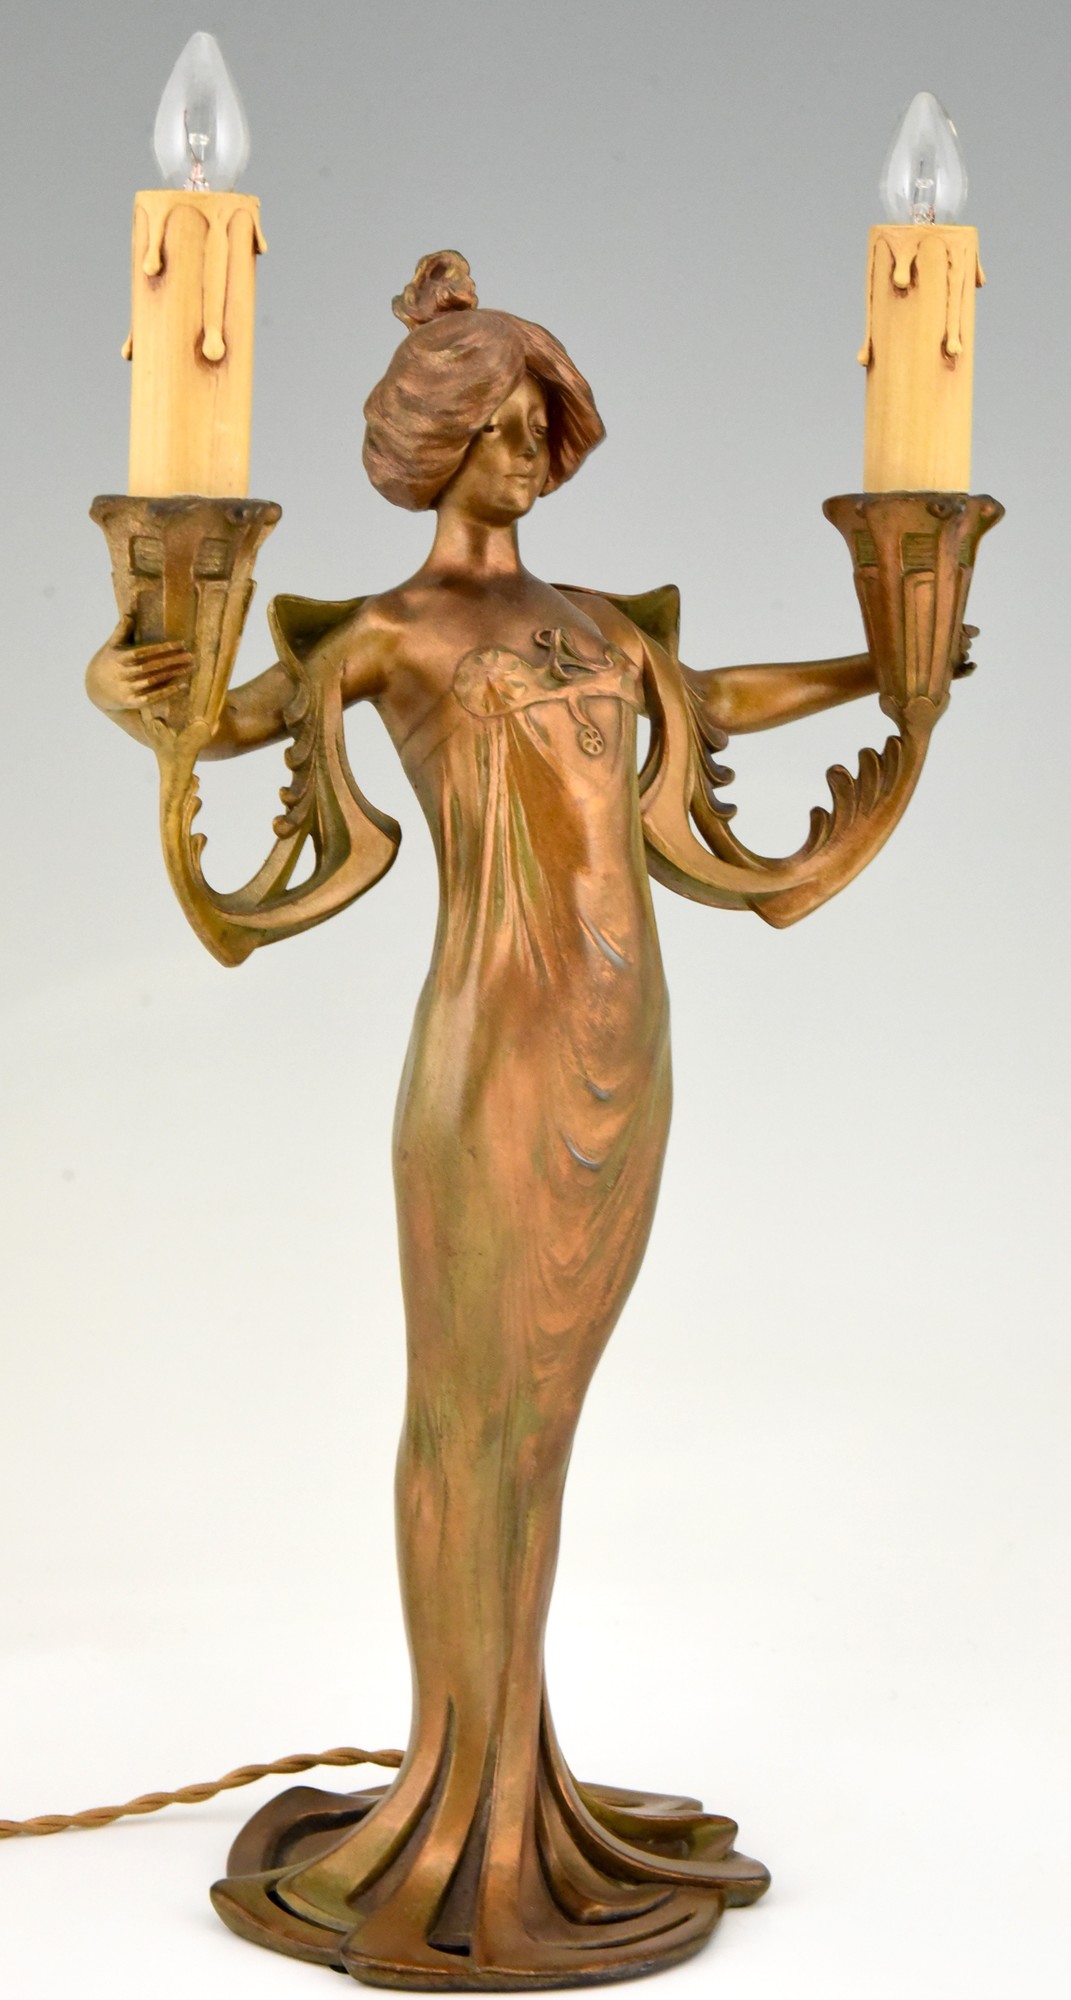 Ontaarden droefheid koel Art Nouveau figural lamp lady with candles - Deconamic